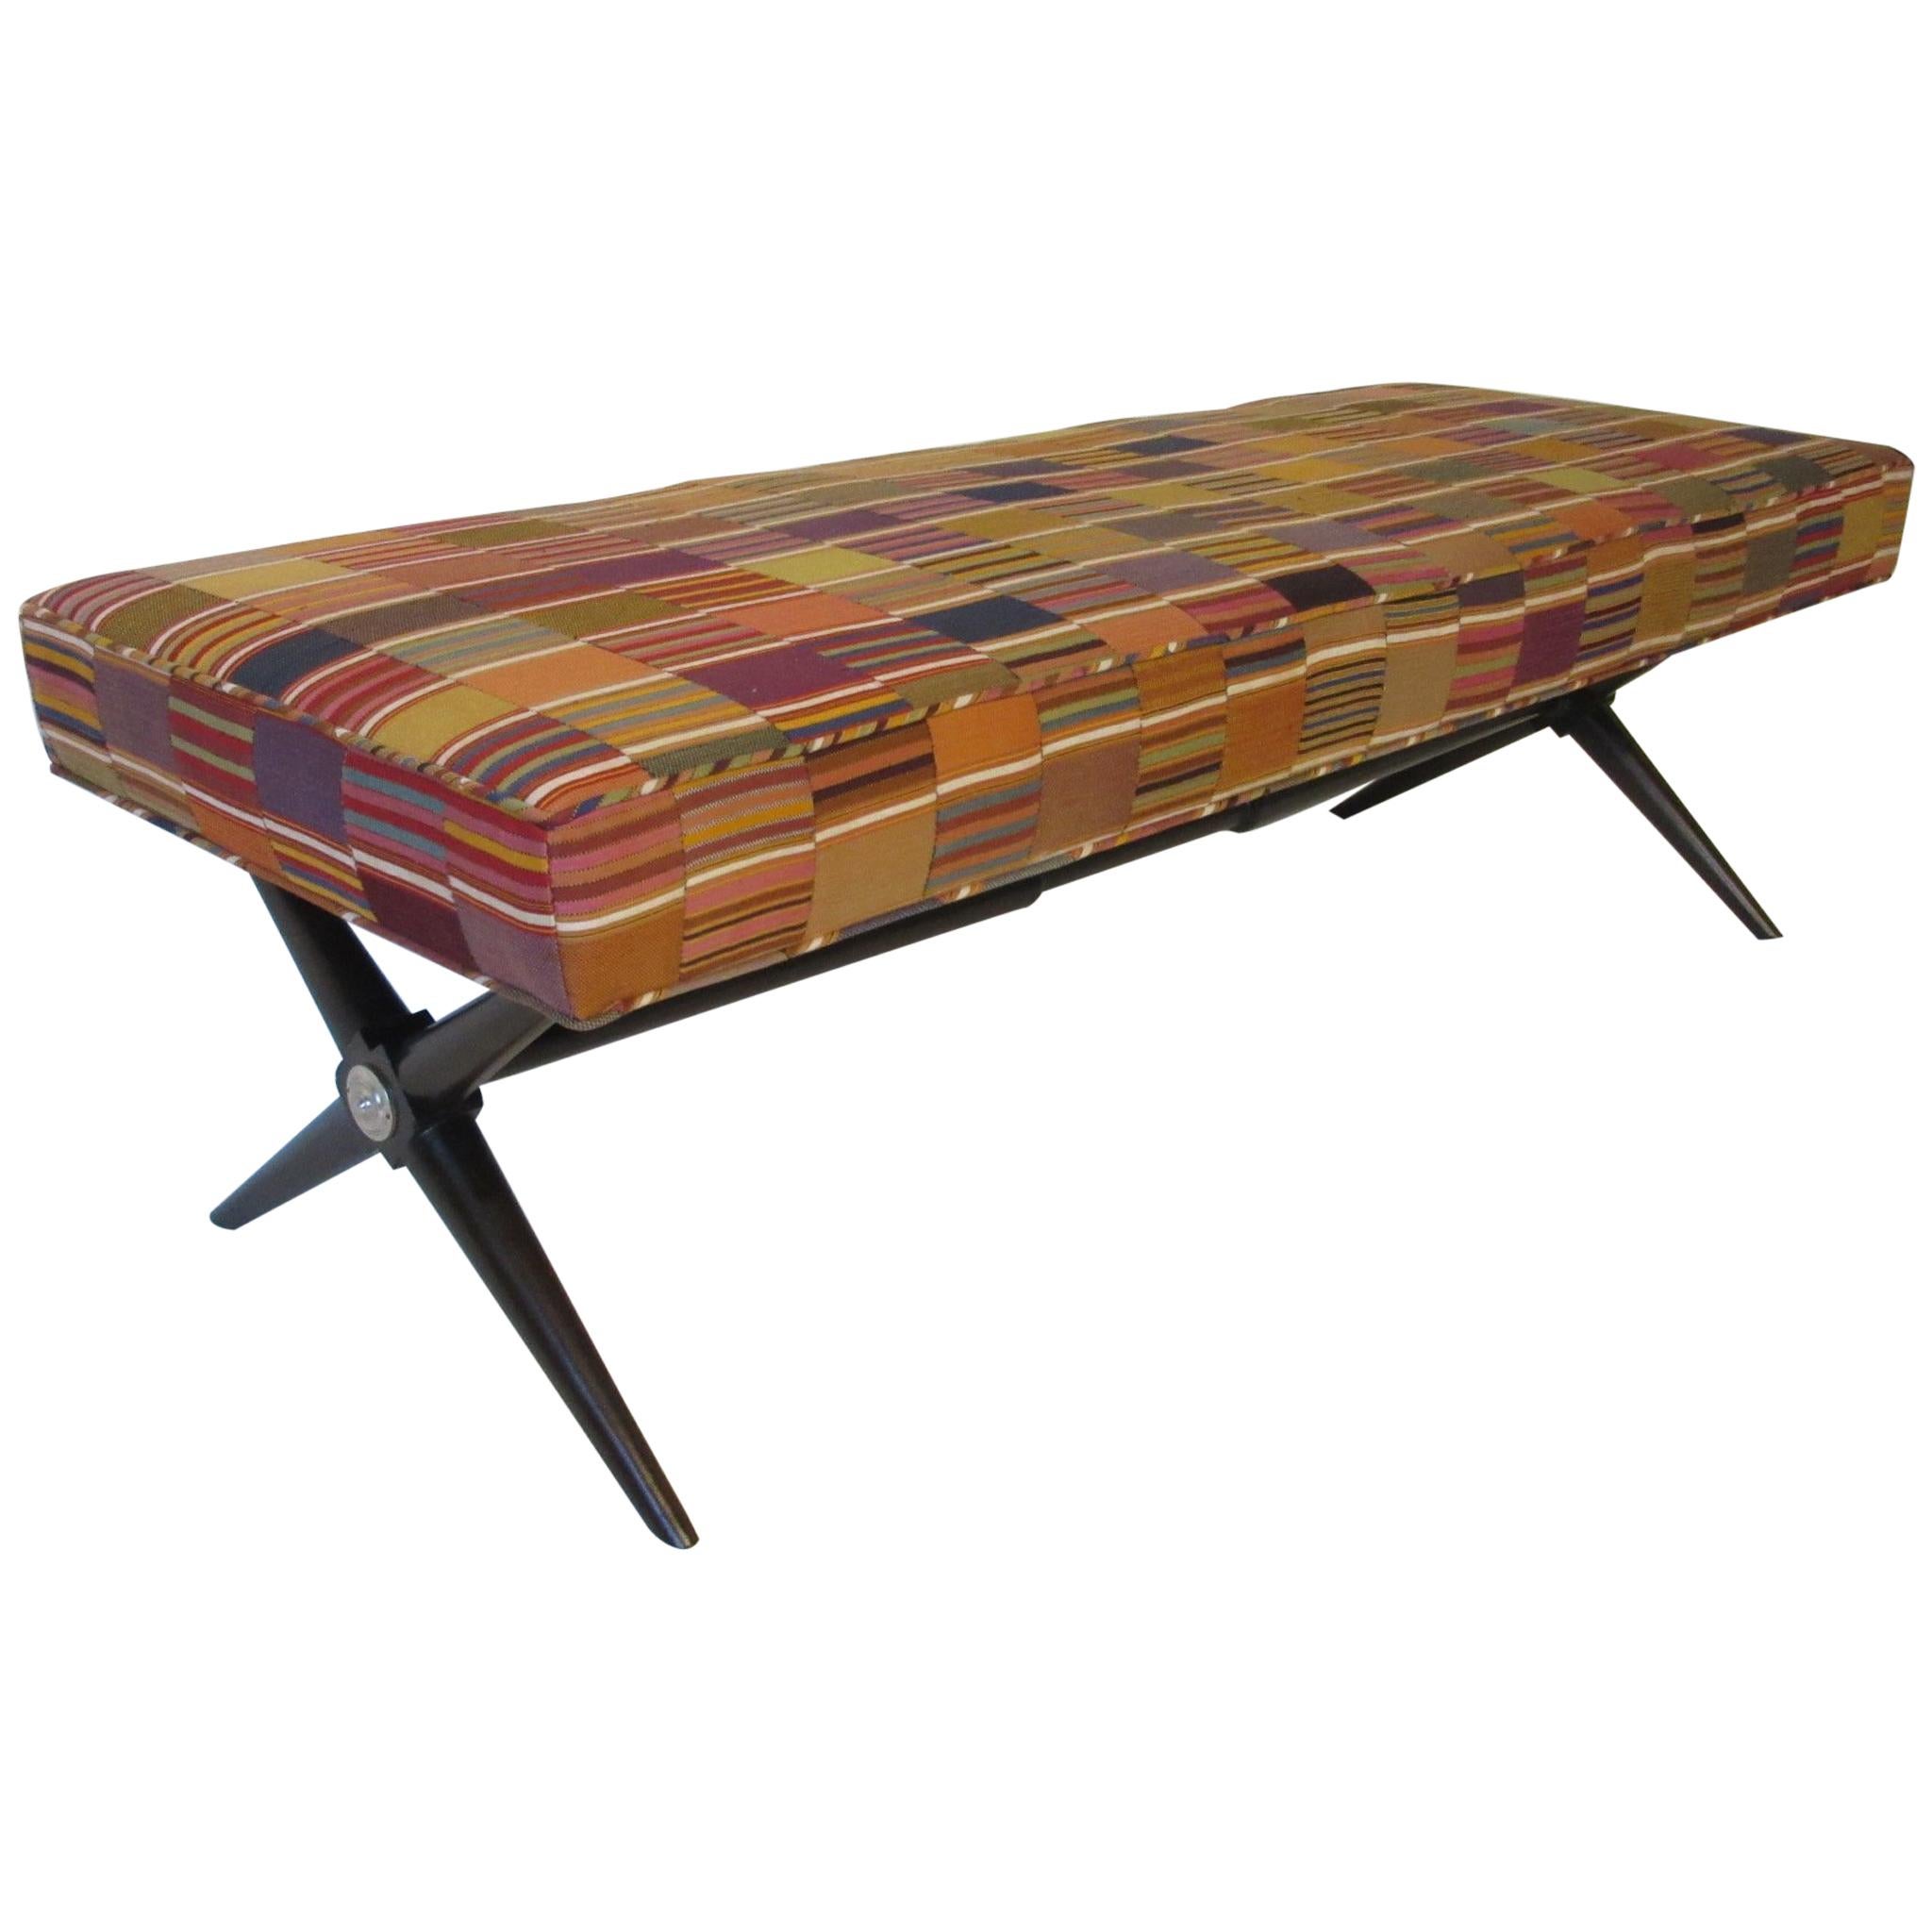 Stunning Ebony X-Based Bench with Handloomed Fabric